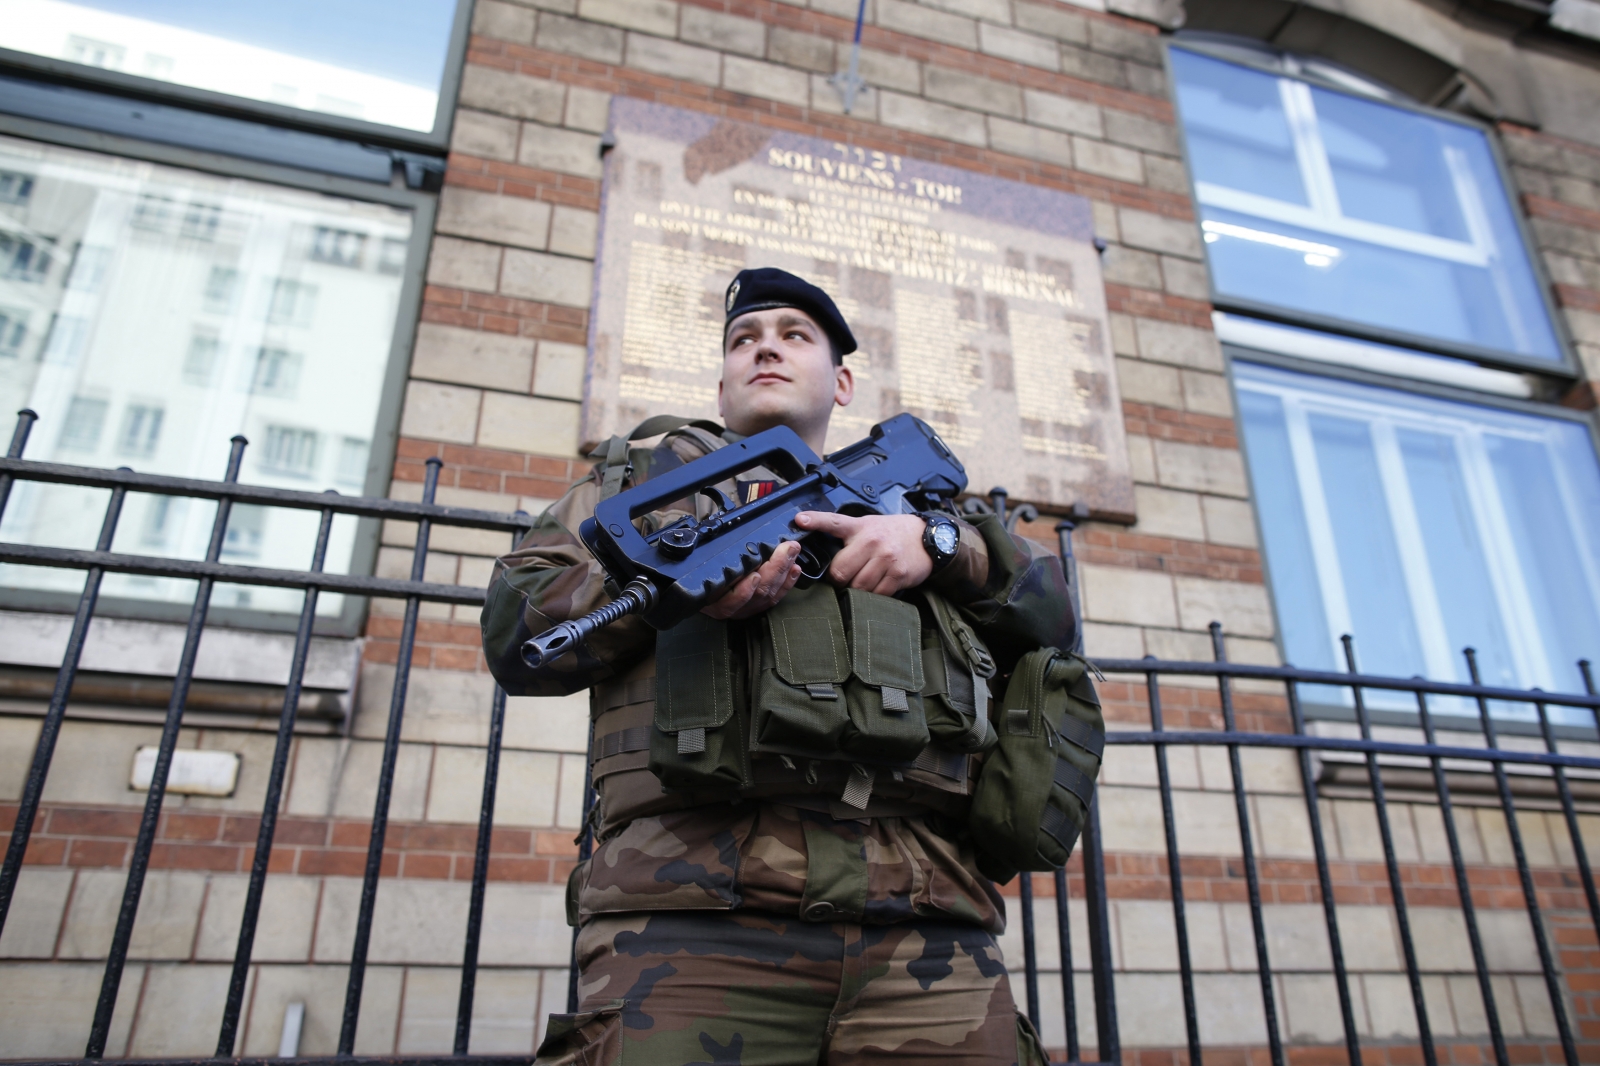 Charlie Hebdo France police step up security